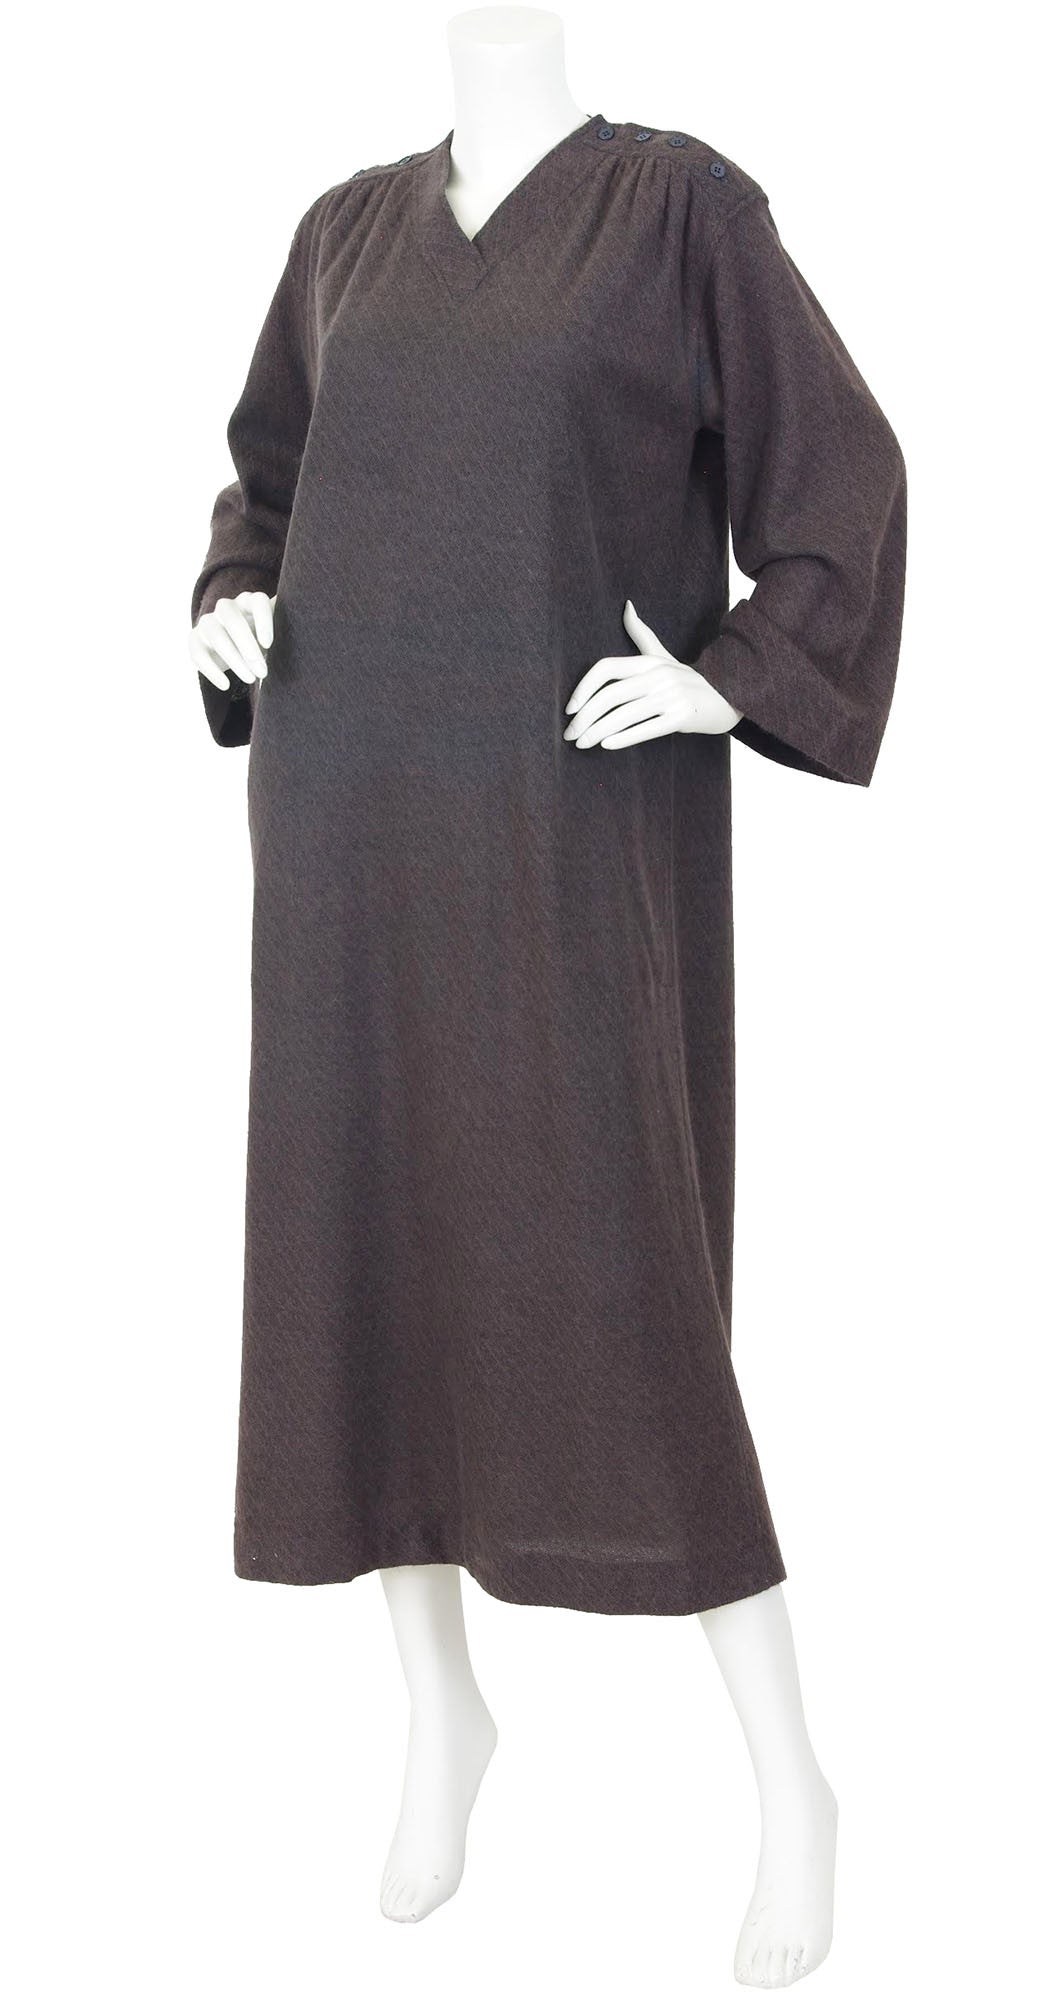 1978 Documented Brown Caftan Dress